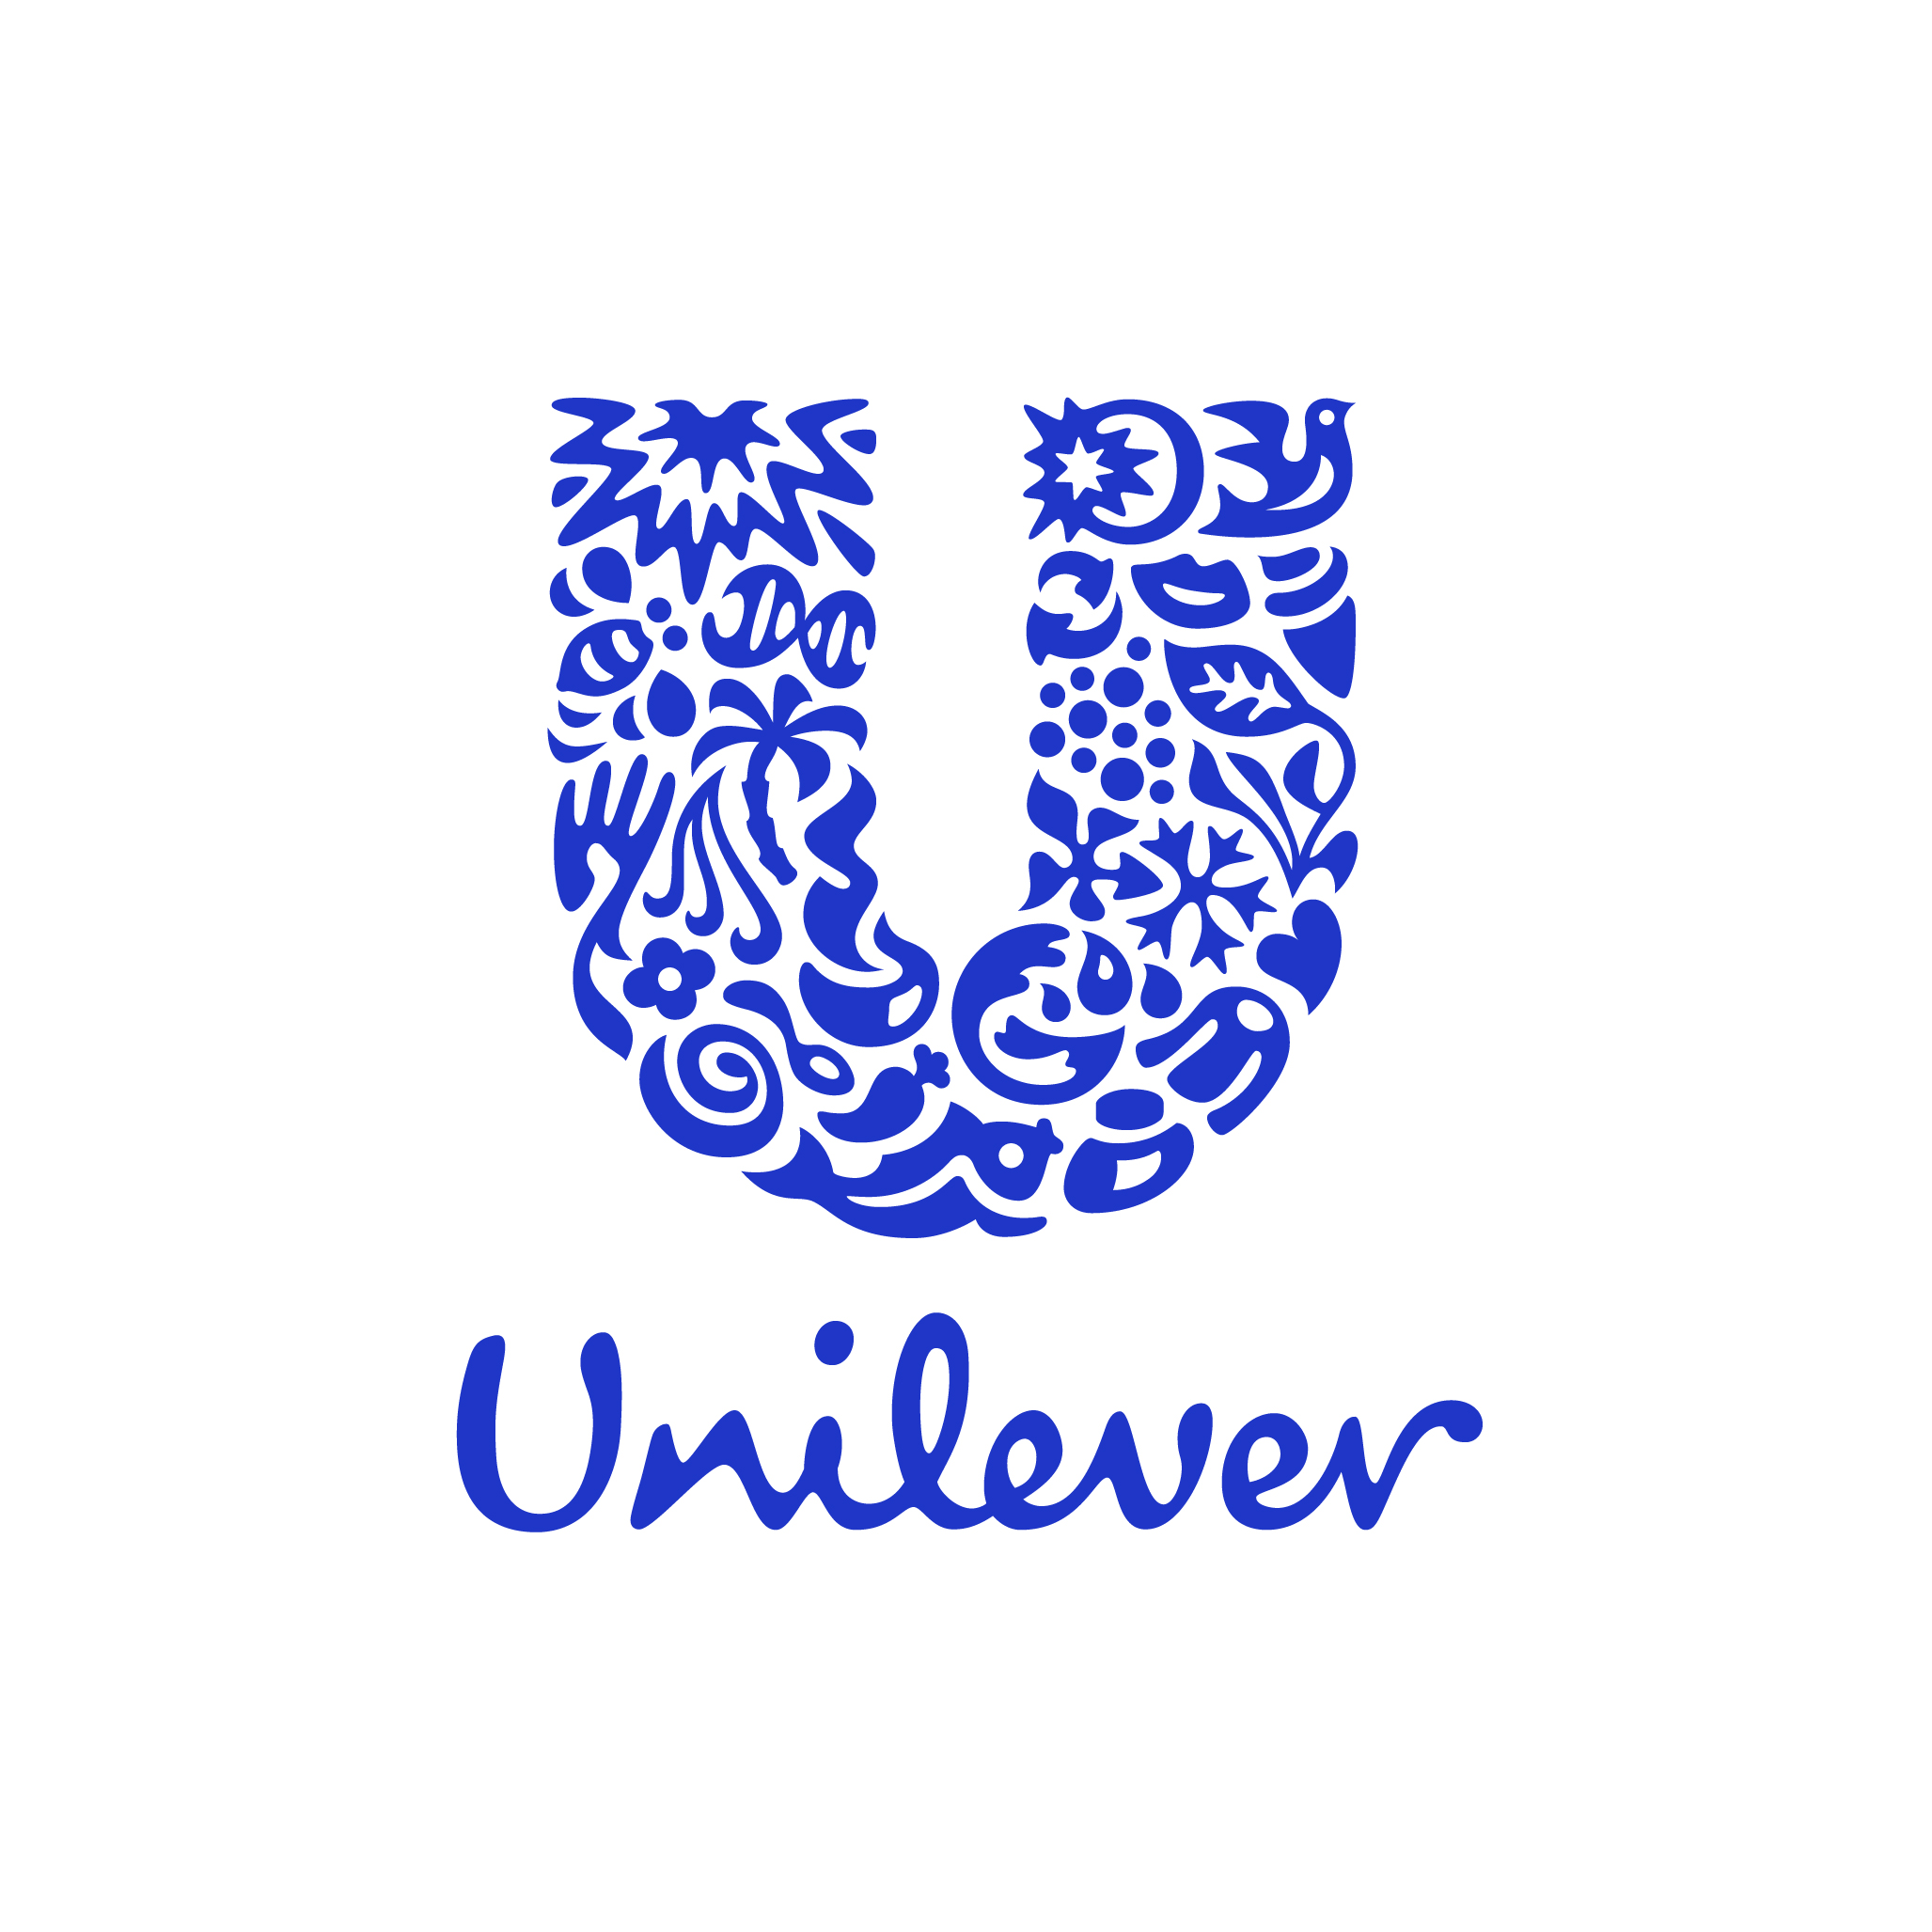 Unilever Poland Services Sp. zoo